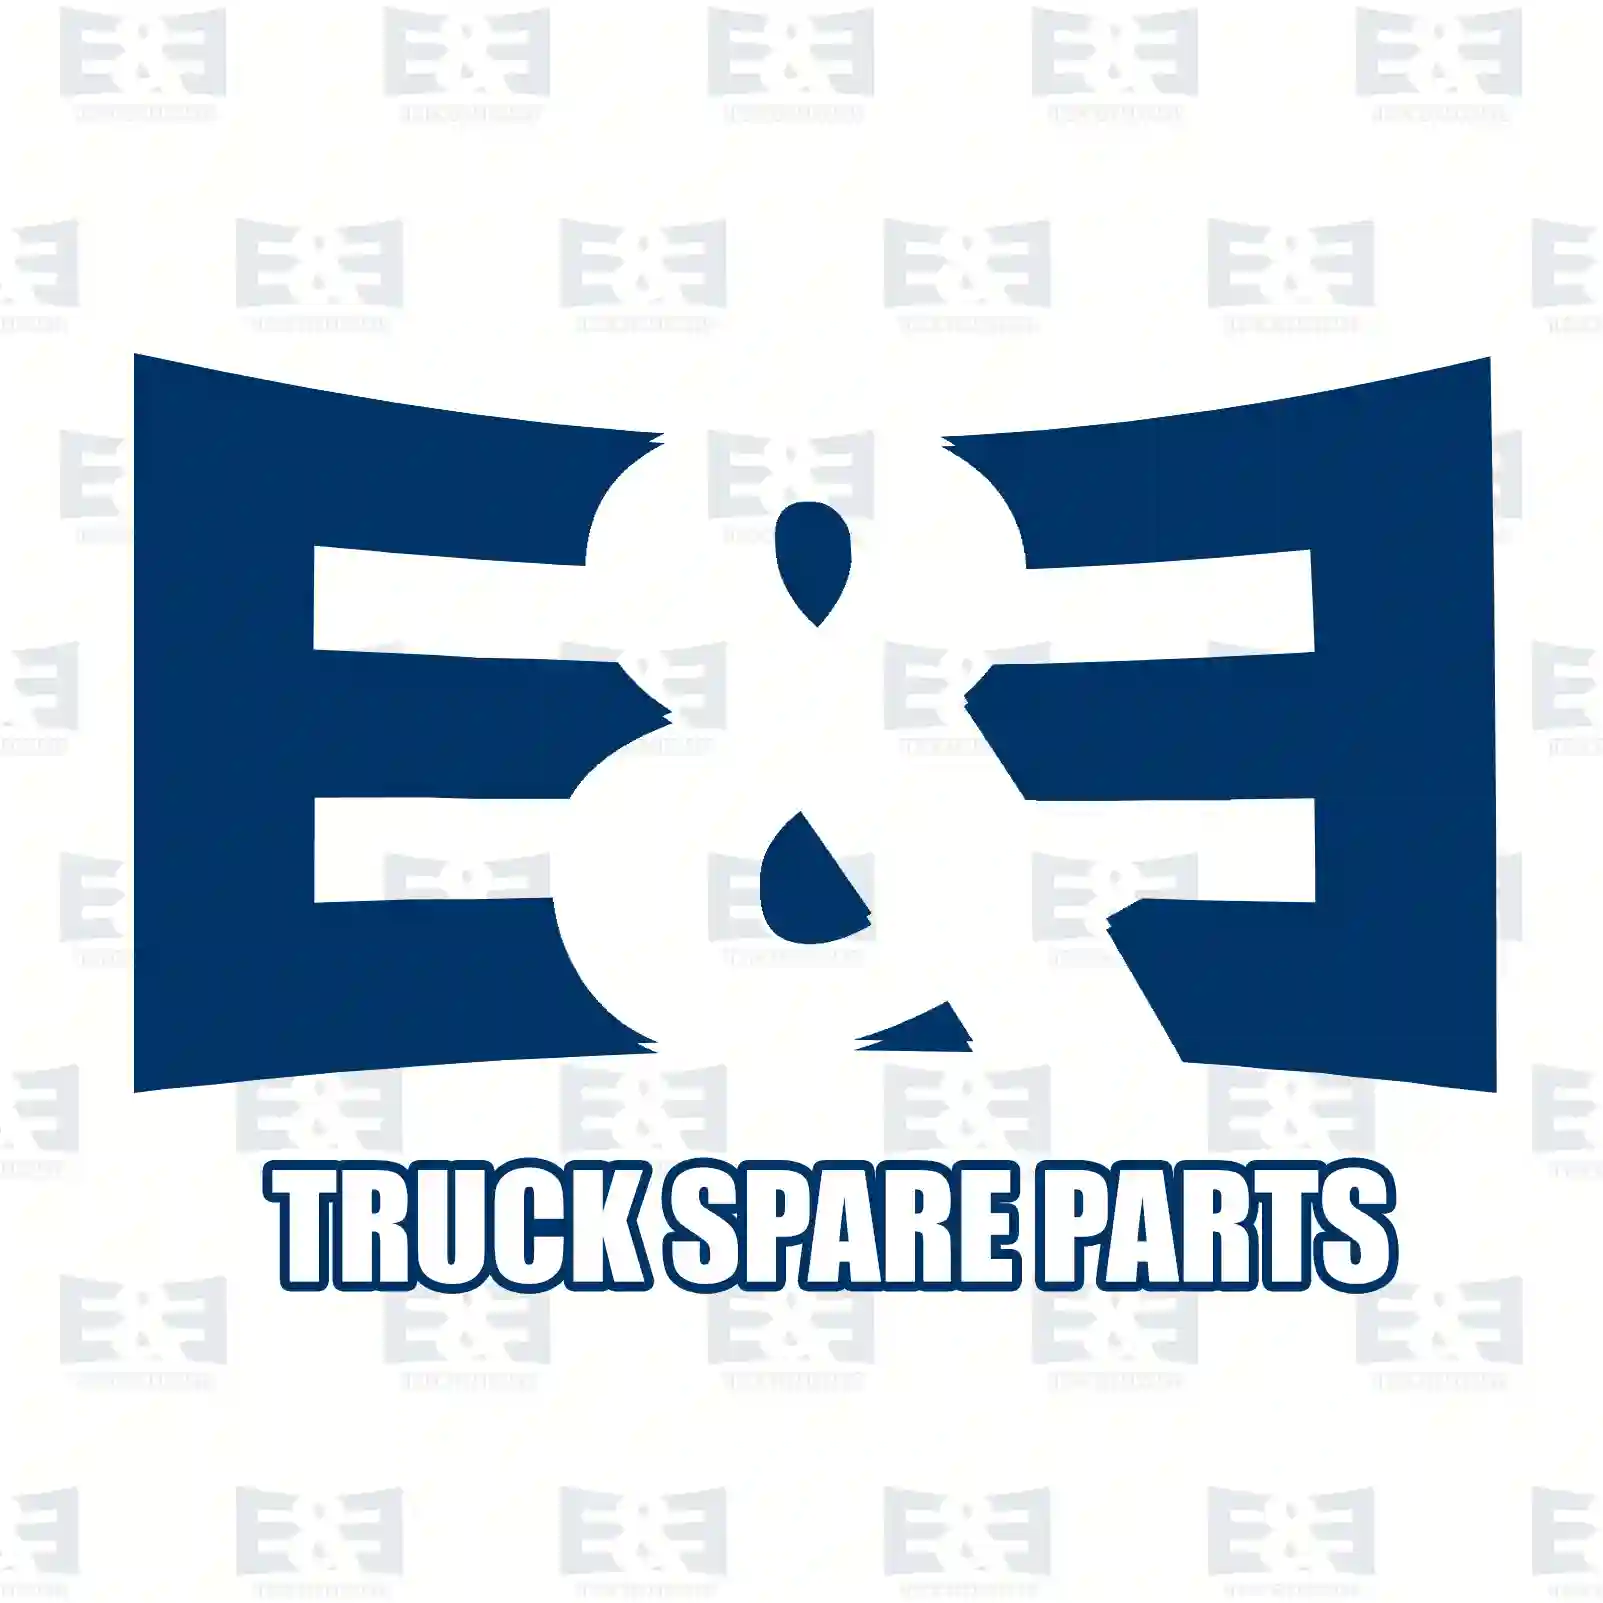 Ball bearing, 2E2203738, 345595, 1660115, 1675763, ZG40188-0008 ||  2E2203738 E&E Truck Spare Parts | Truck Spare Parts, Auotomotive Spare Parts Ball bearing, 2E2203738, 345595, 1660115, 1675763, ZG40188-0008 ||  2E2203738 E&E Truck Spare Parts | Truck Spare Parts, Auotomotive Spare Parts